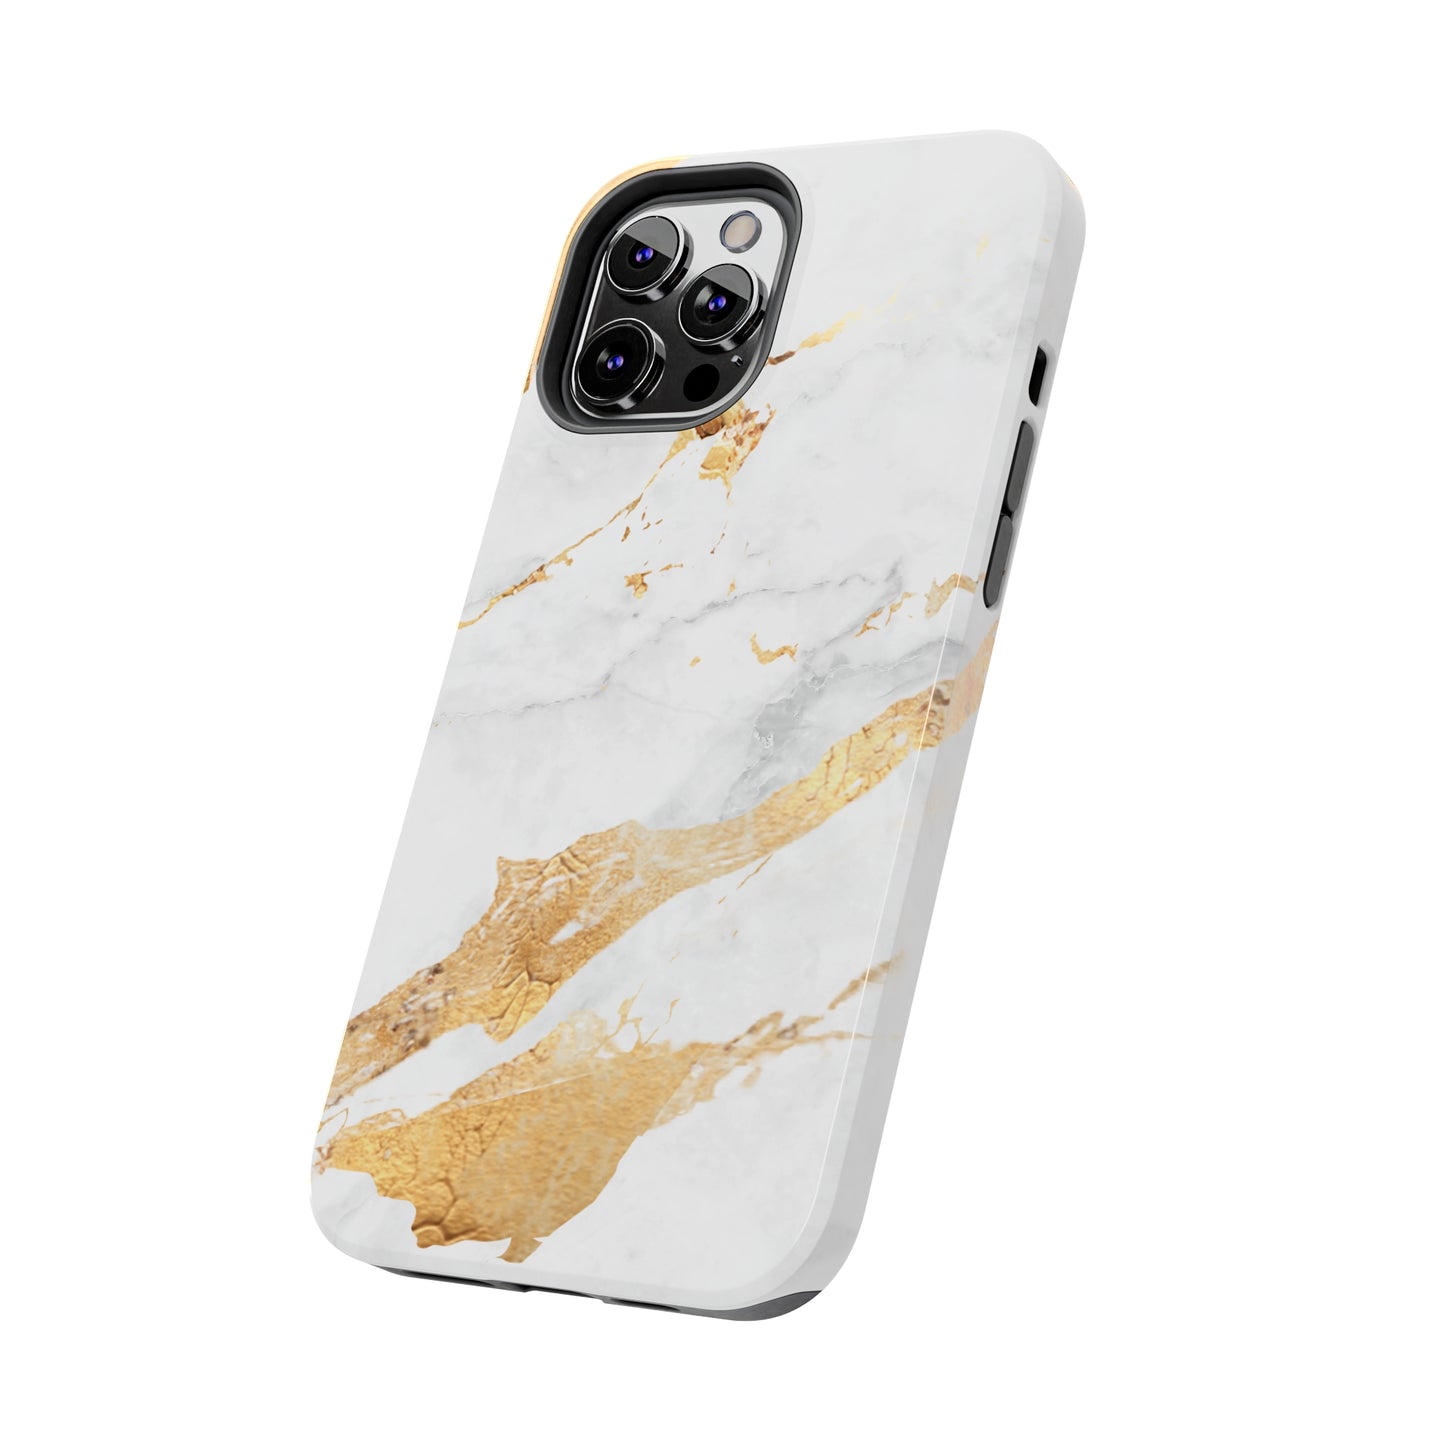 Marble Gold Design Tough Phone Cases